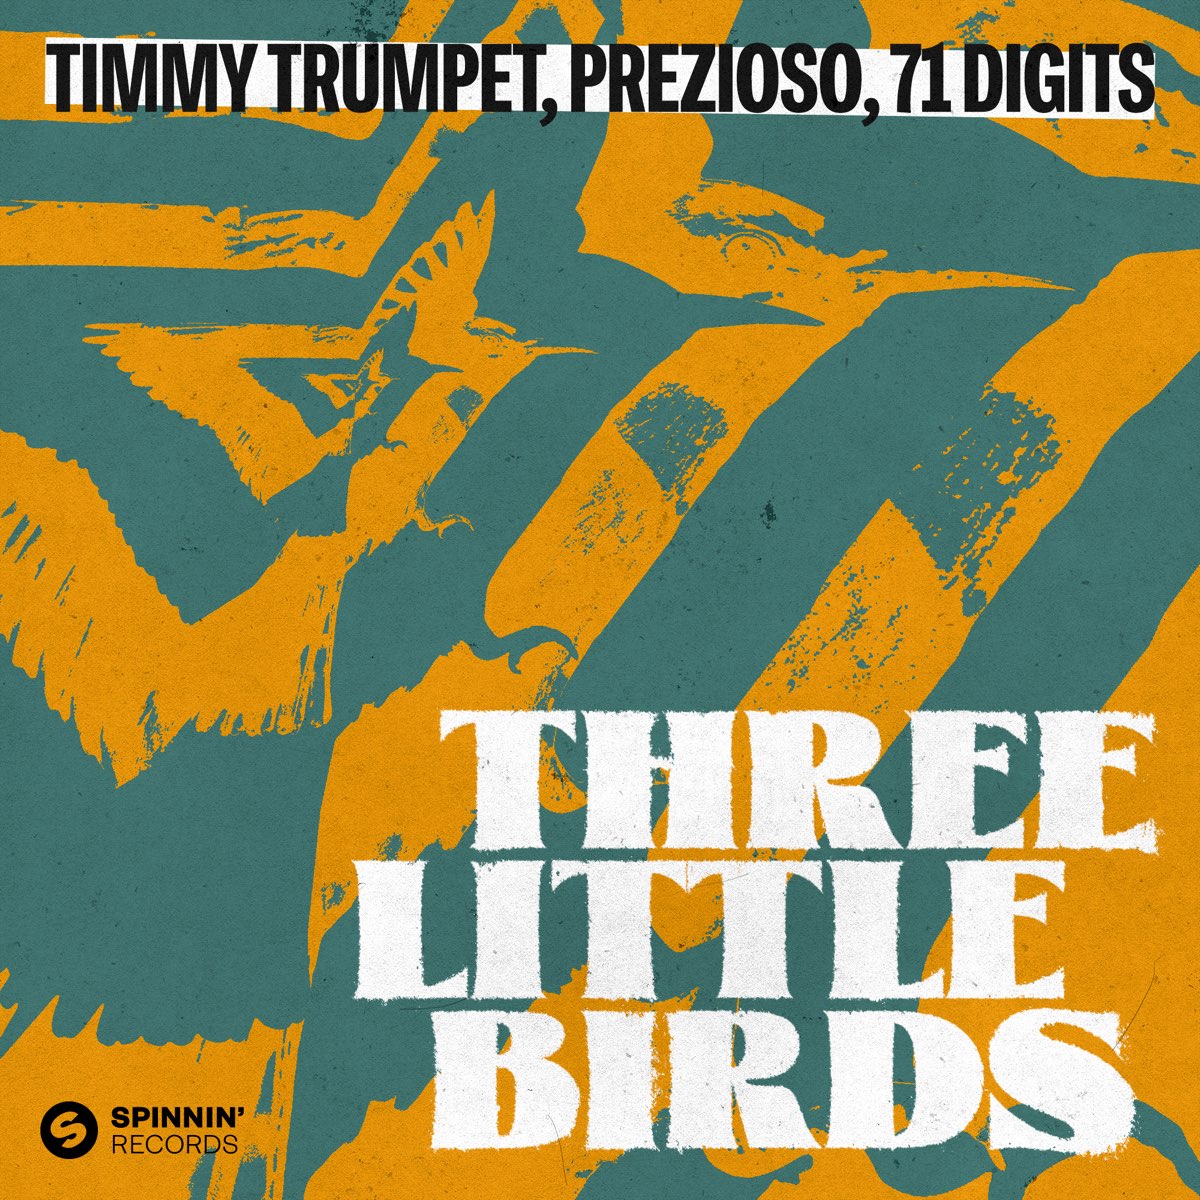 Timmy Trumpet, Prezioso, & 71 Digits Three Little Birds cover artwork